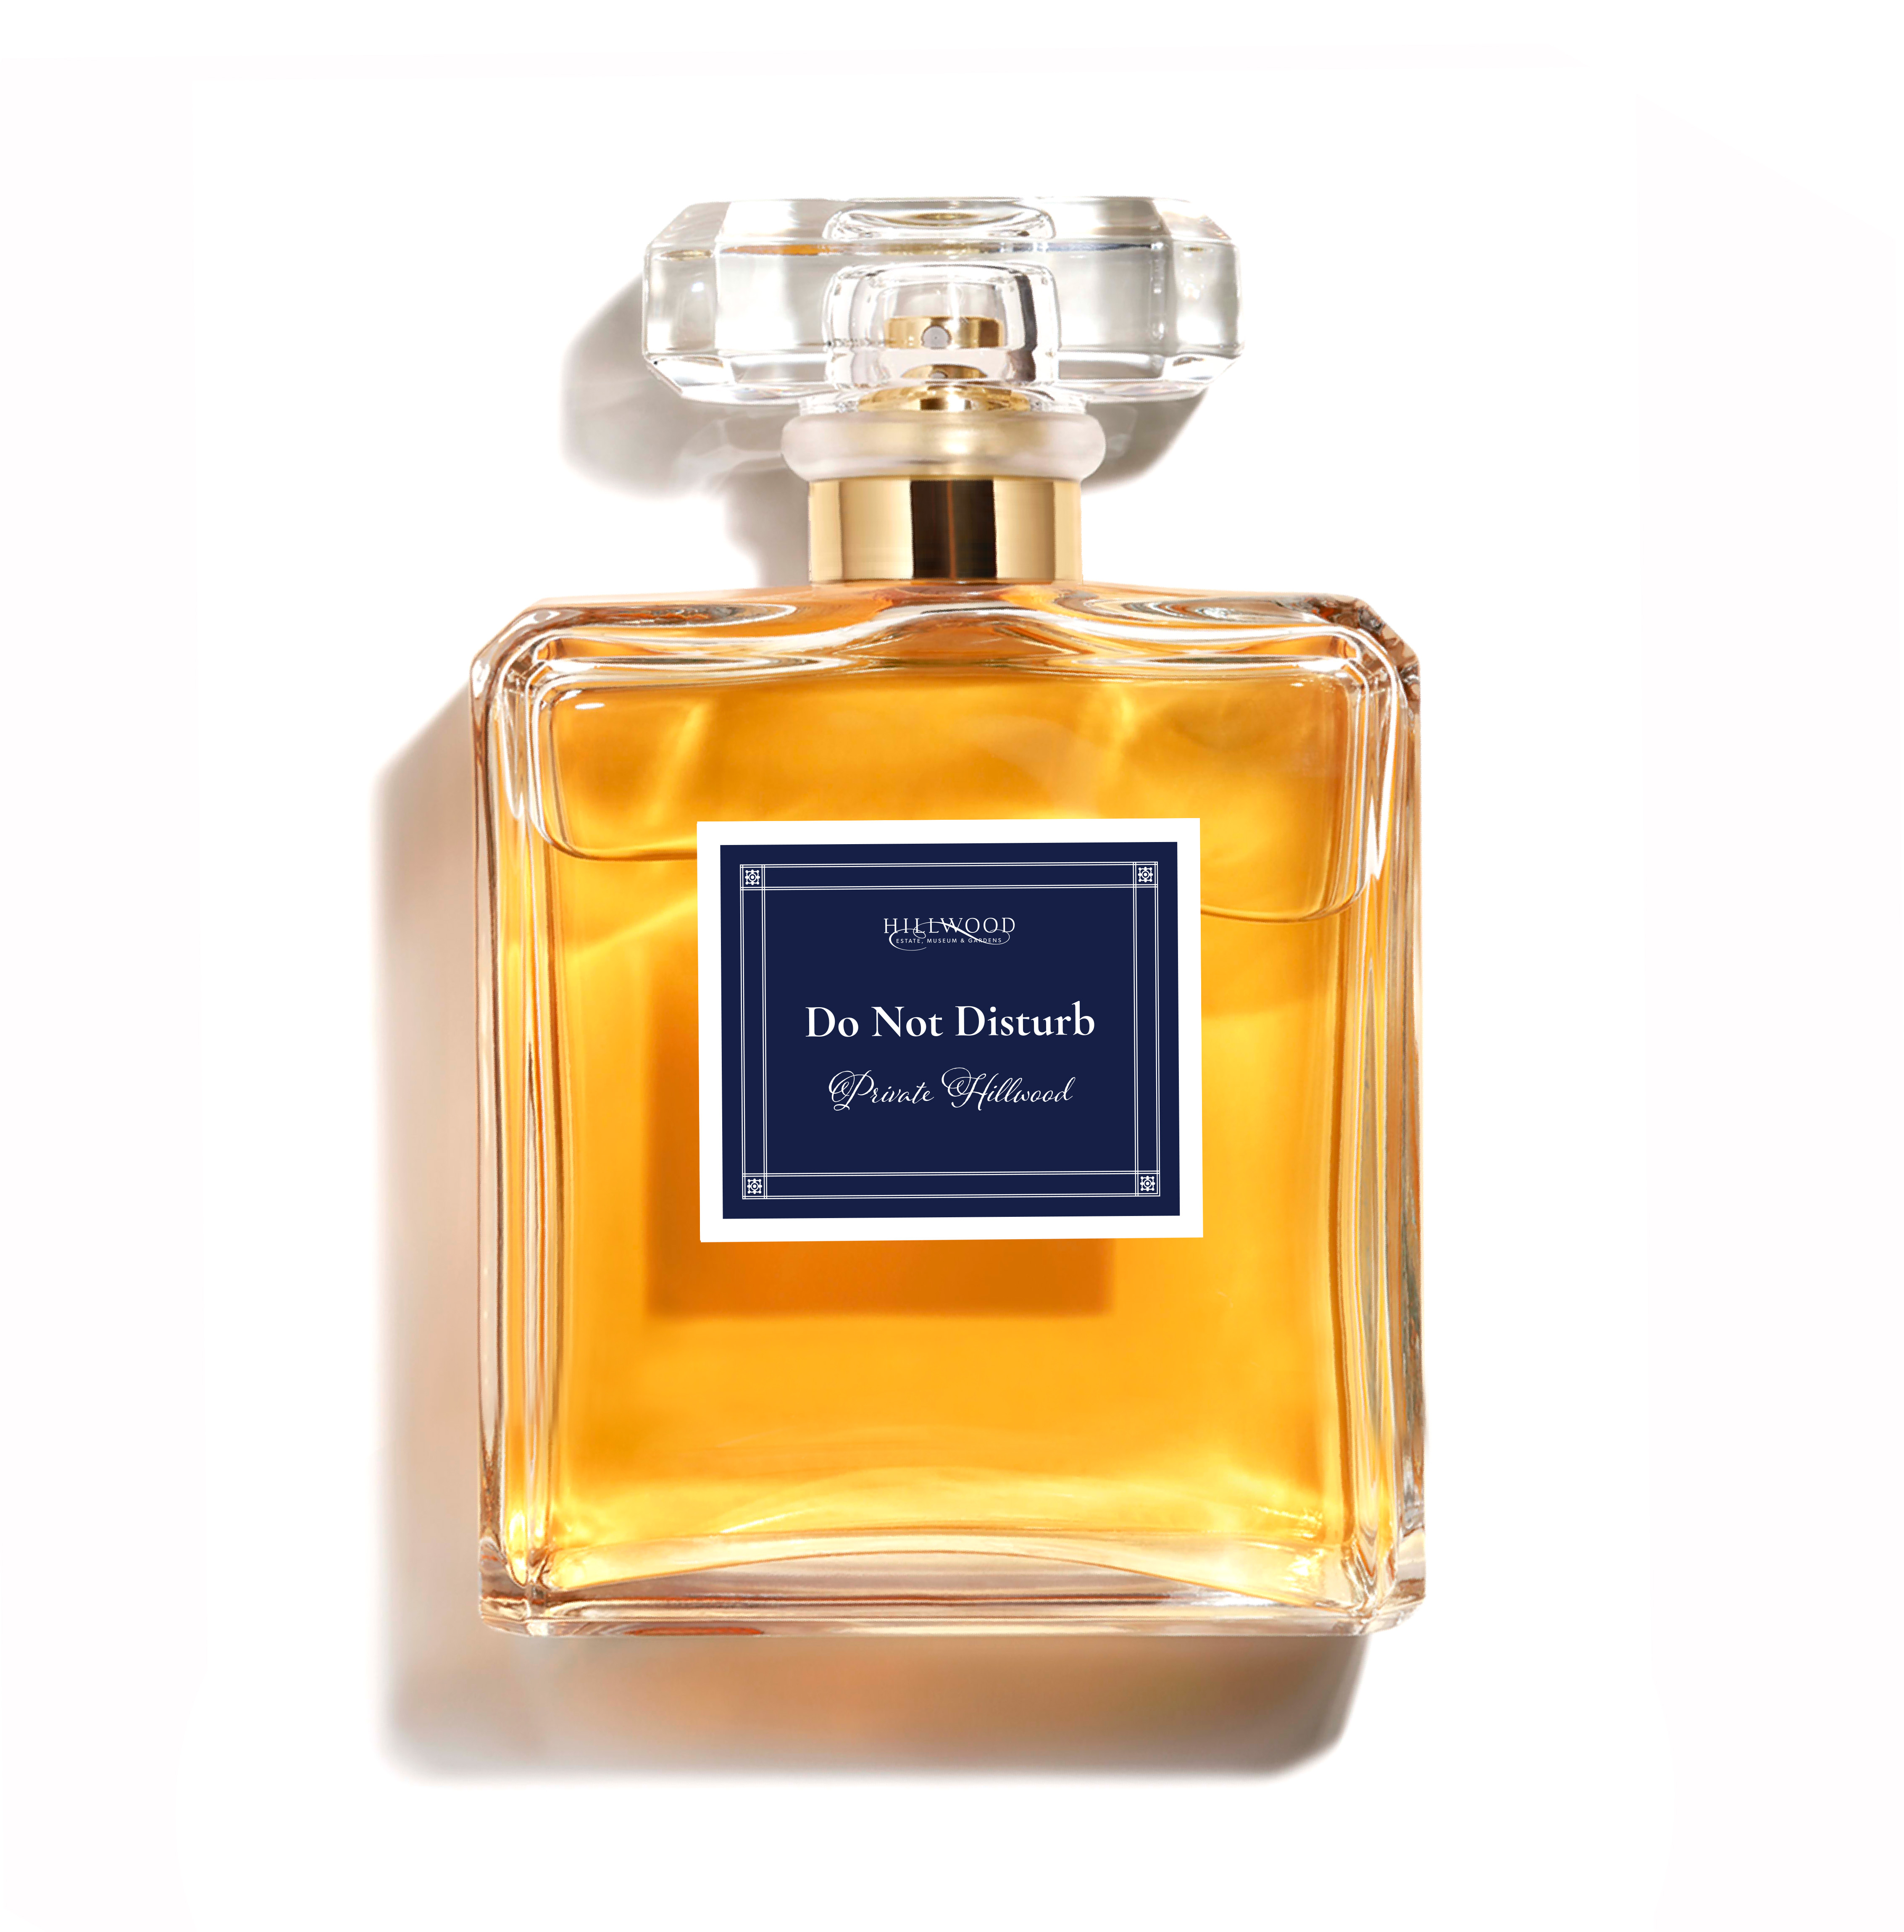 Hillwood's new fragrance, Do Not Disturb